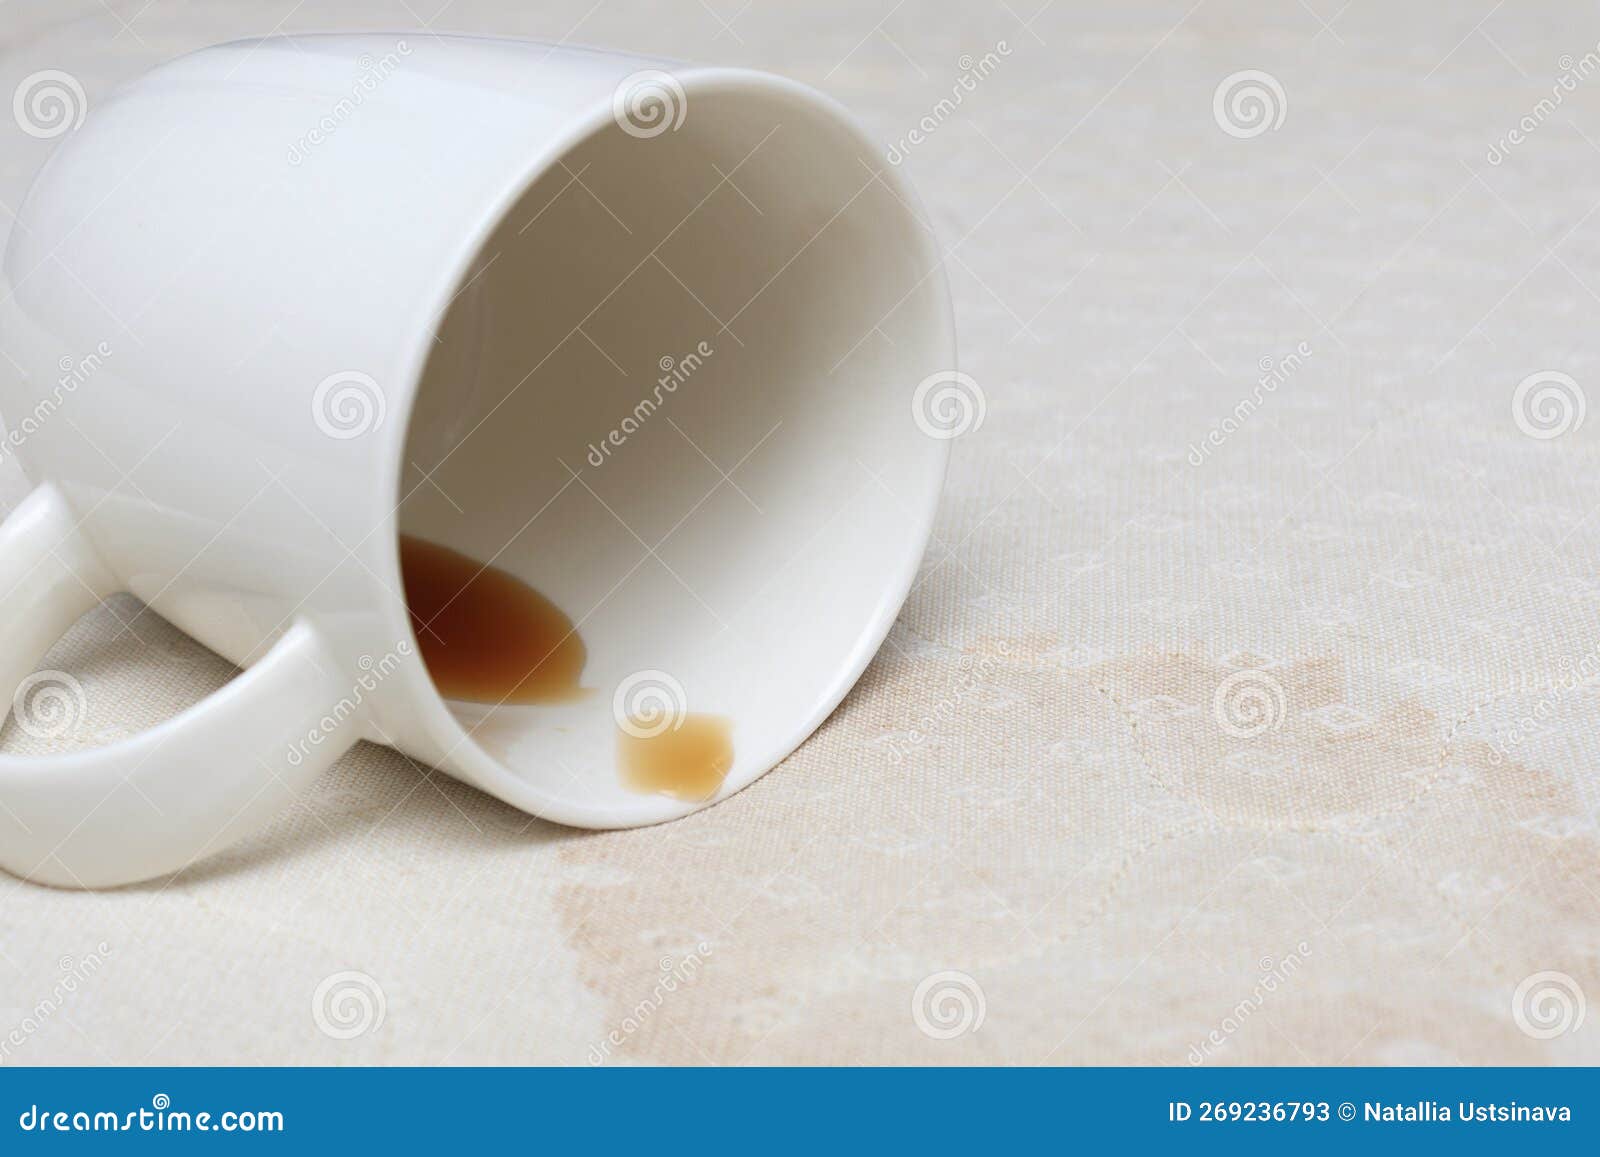 spilled coffee on memory foam mattress